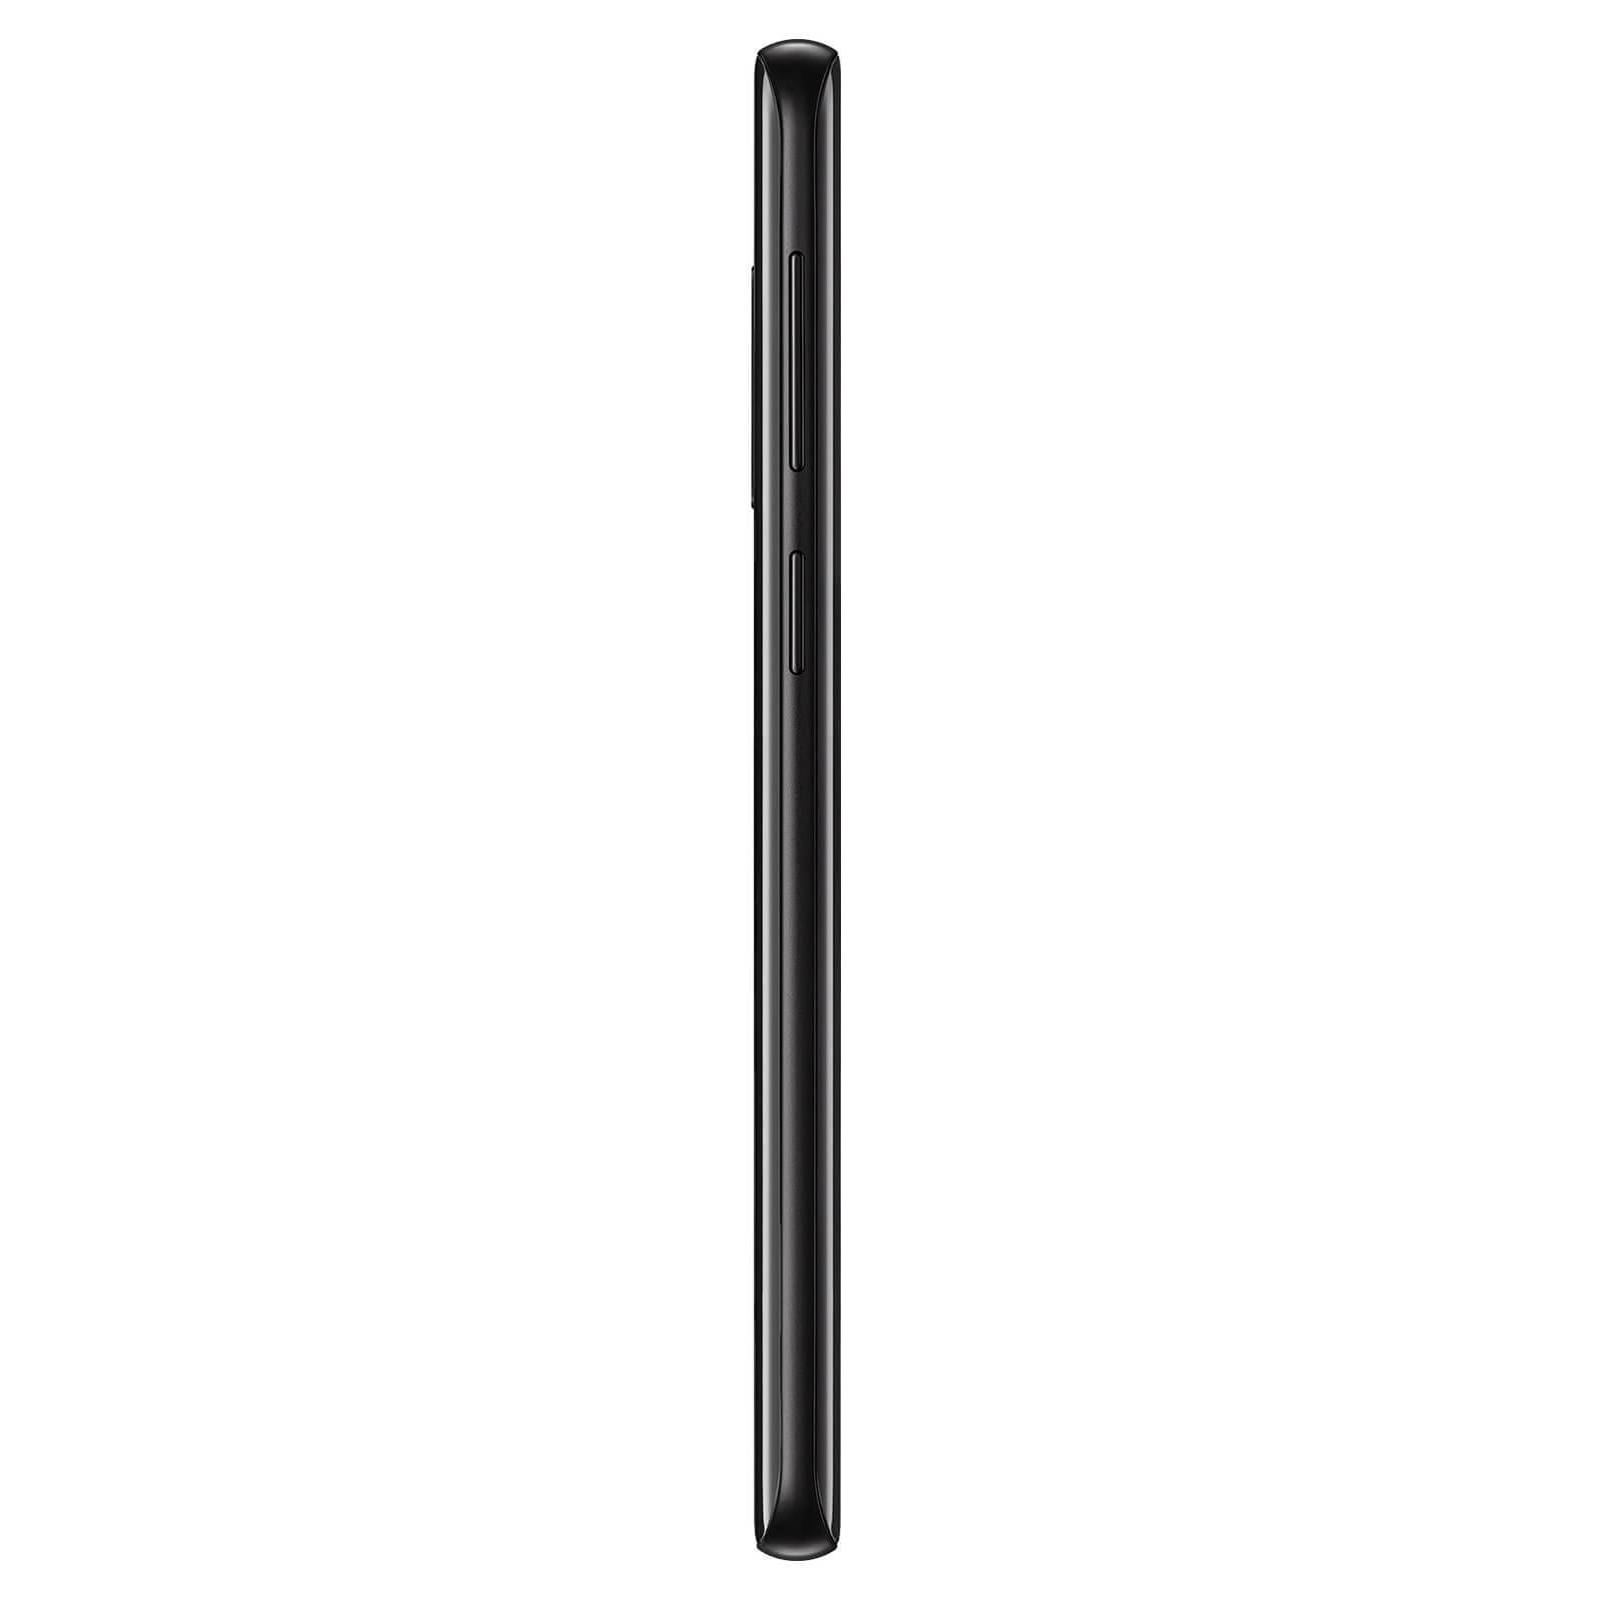 Celular Samsung Galaxy S9 Color Negro Telcel